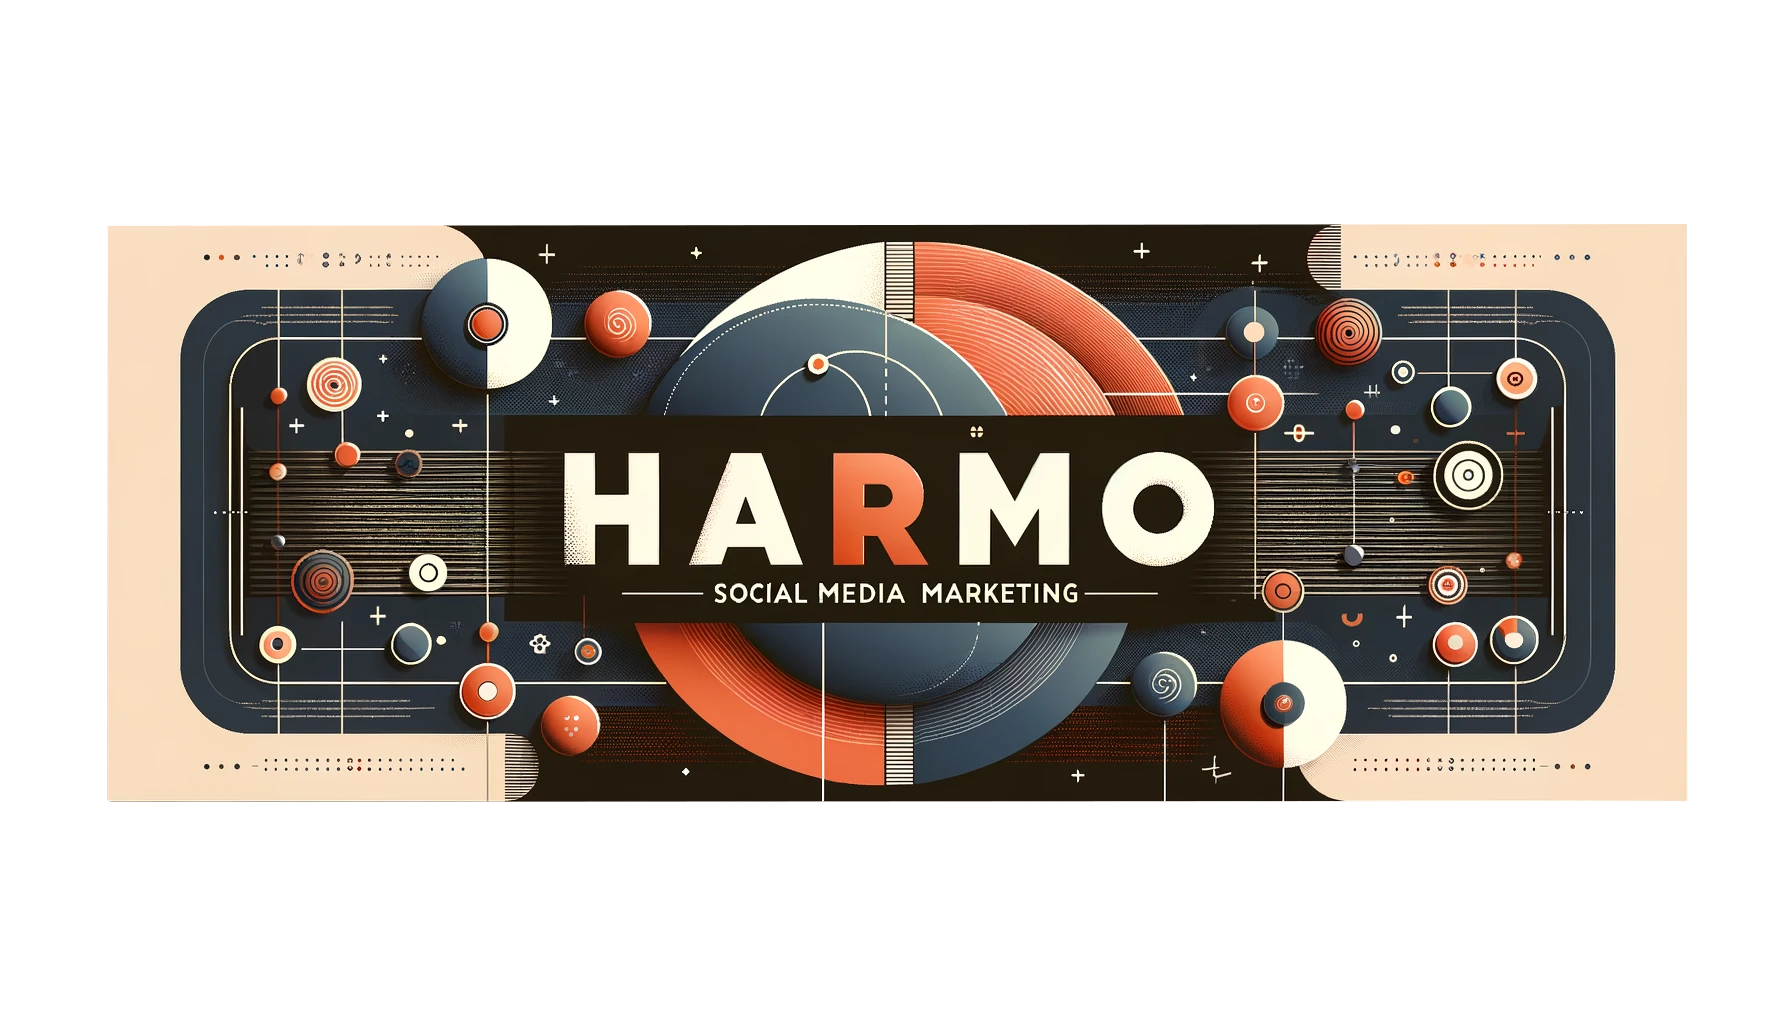 HARMO Social Mediai Marketing